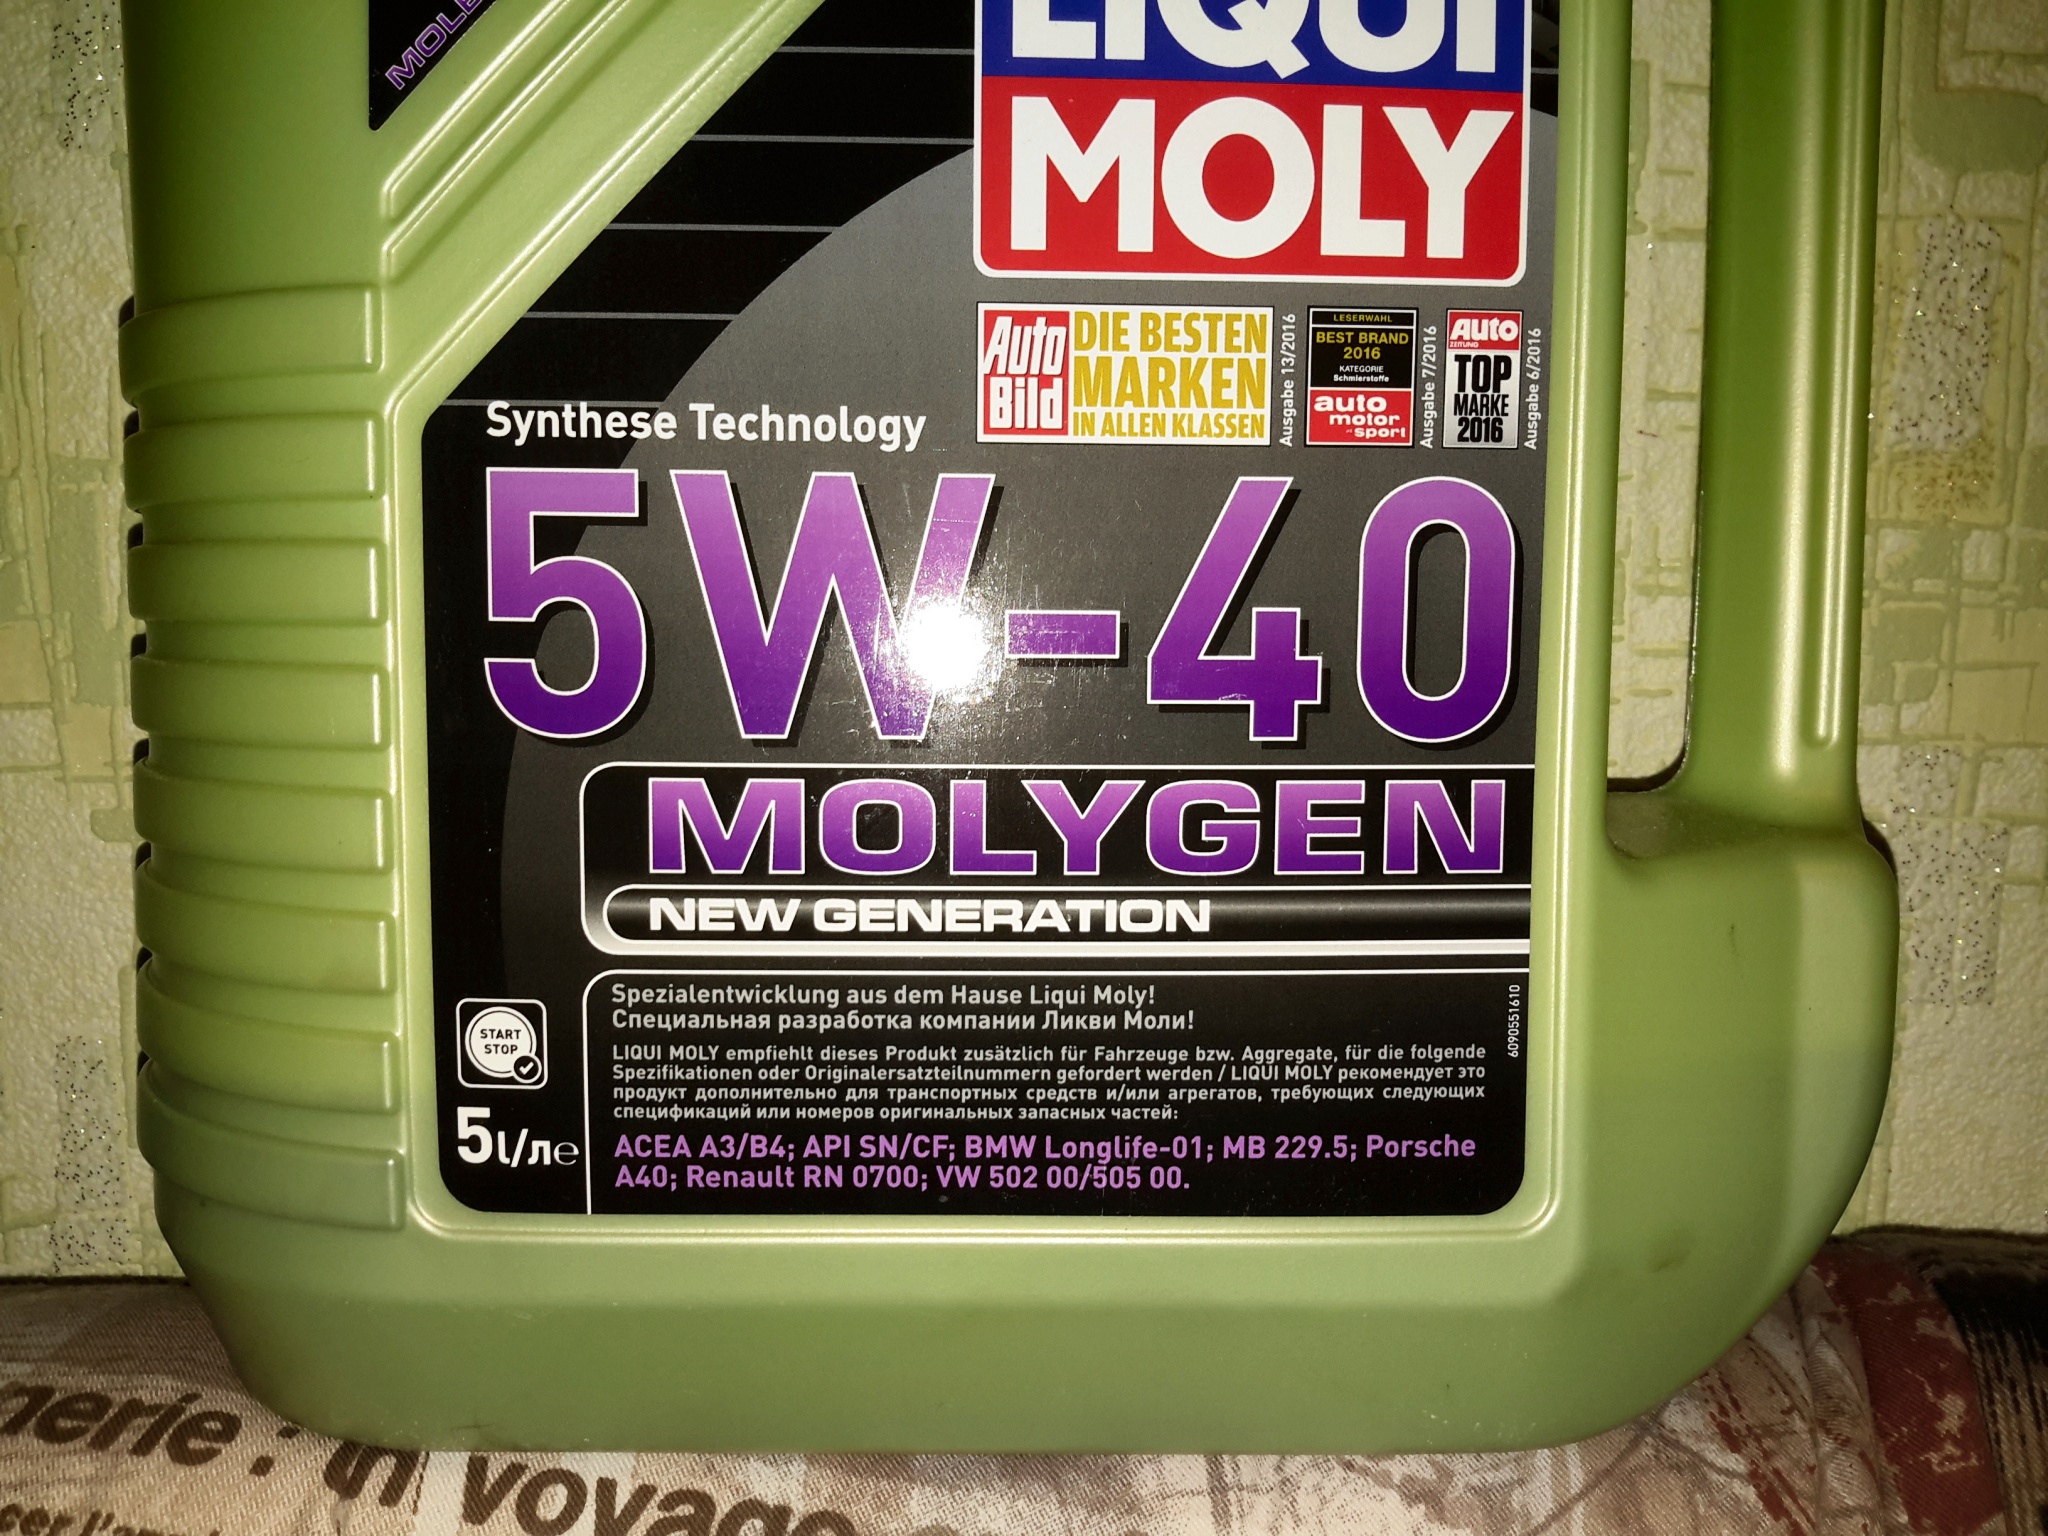 Моторное масло ликви моли молиген. Ликви моли молиген. Molygen 5w-40. Liqui Moly Molygen New Generation 5w-40 цвет. Liqui Moly масло моторное Molygen New Generation.